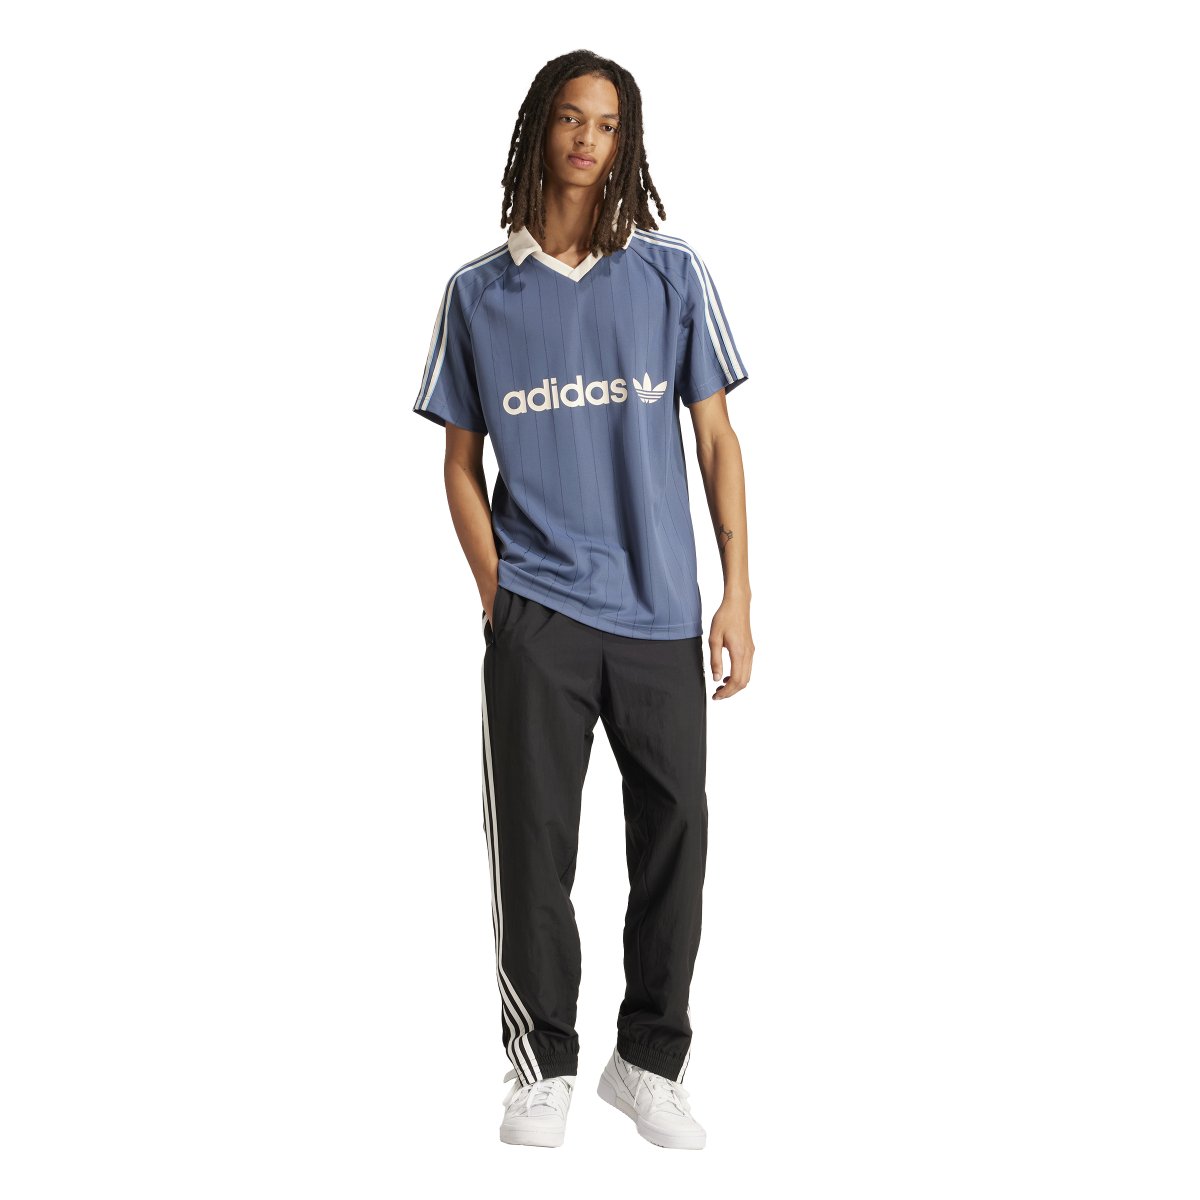 Adidas STRIPE JERSEY Blue - KYOTO - Adidas clothing